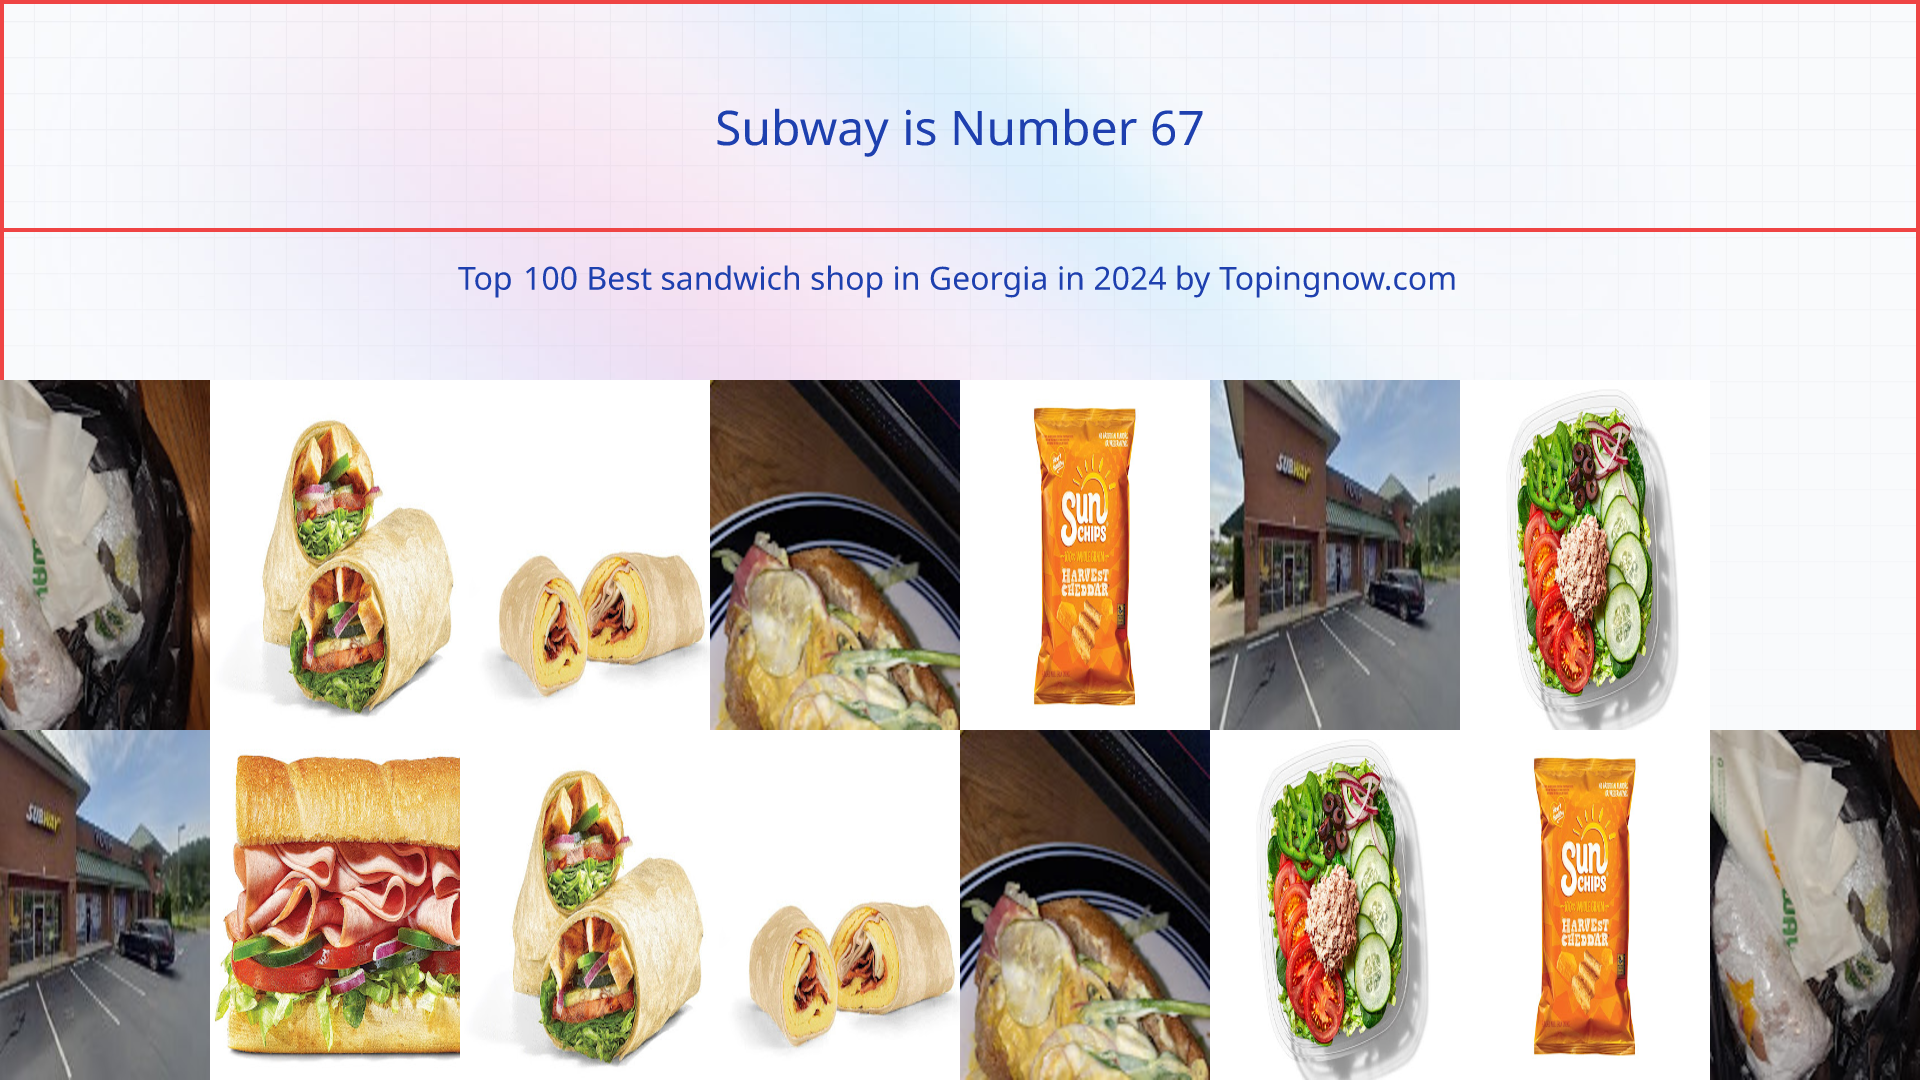 Subway: Top 100 Best sandwich shop in Georgia in 2024